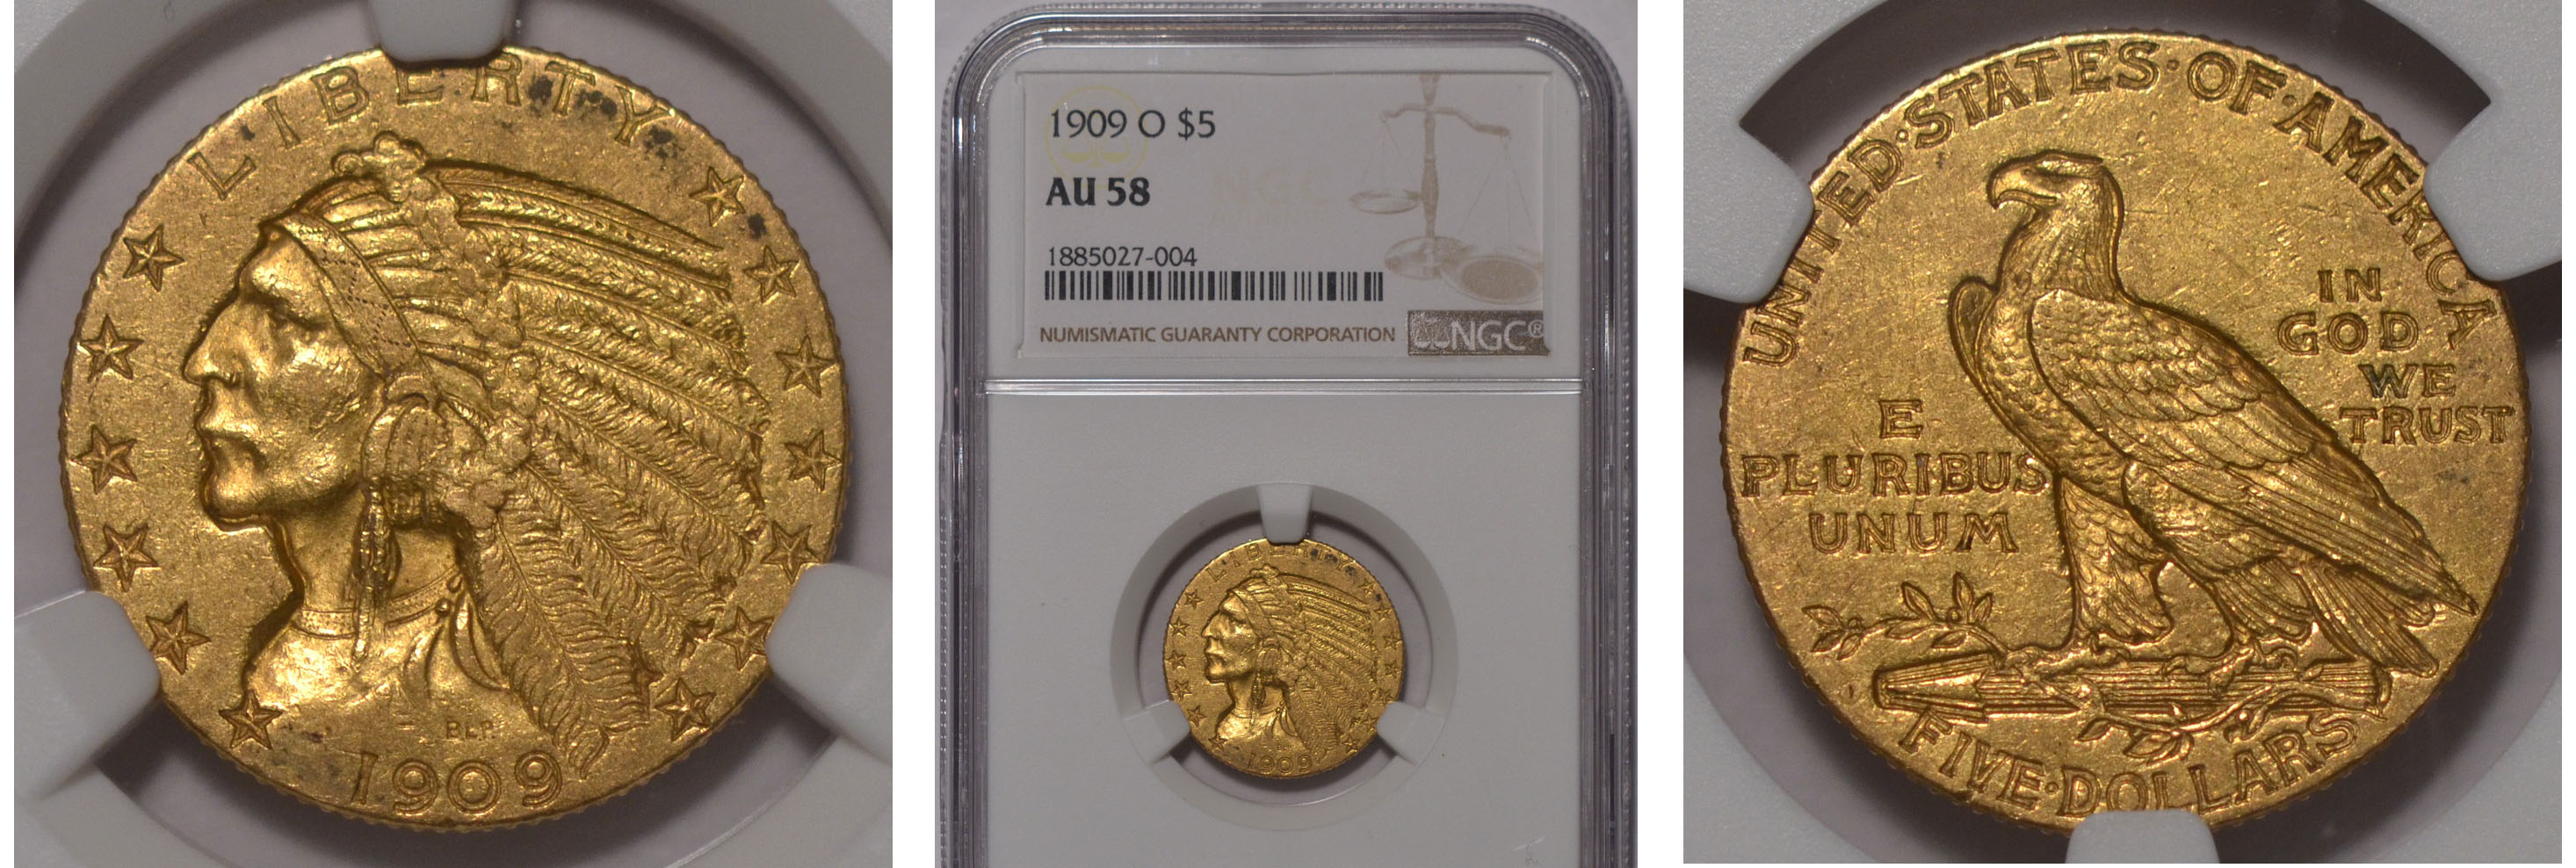 1909-O Half Eagle $5 NGC AU58